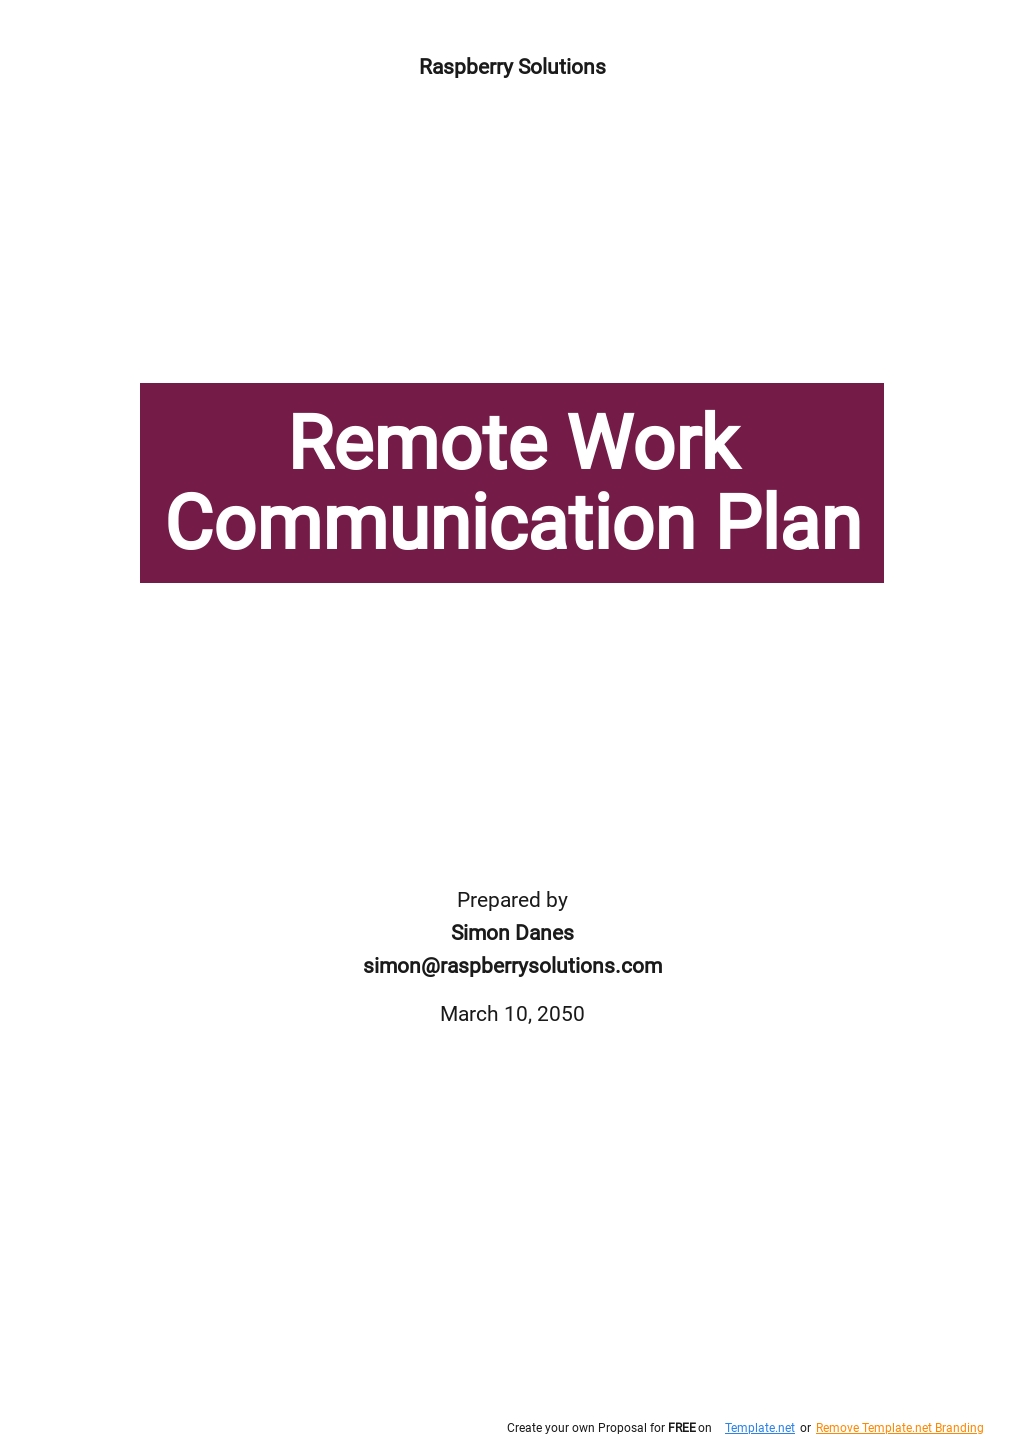 Remote Work Communication Plan Template.jpe